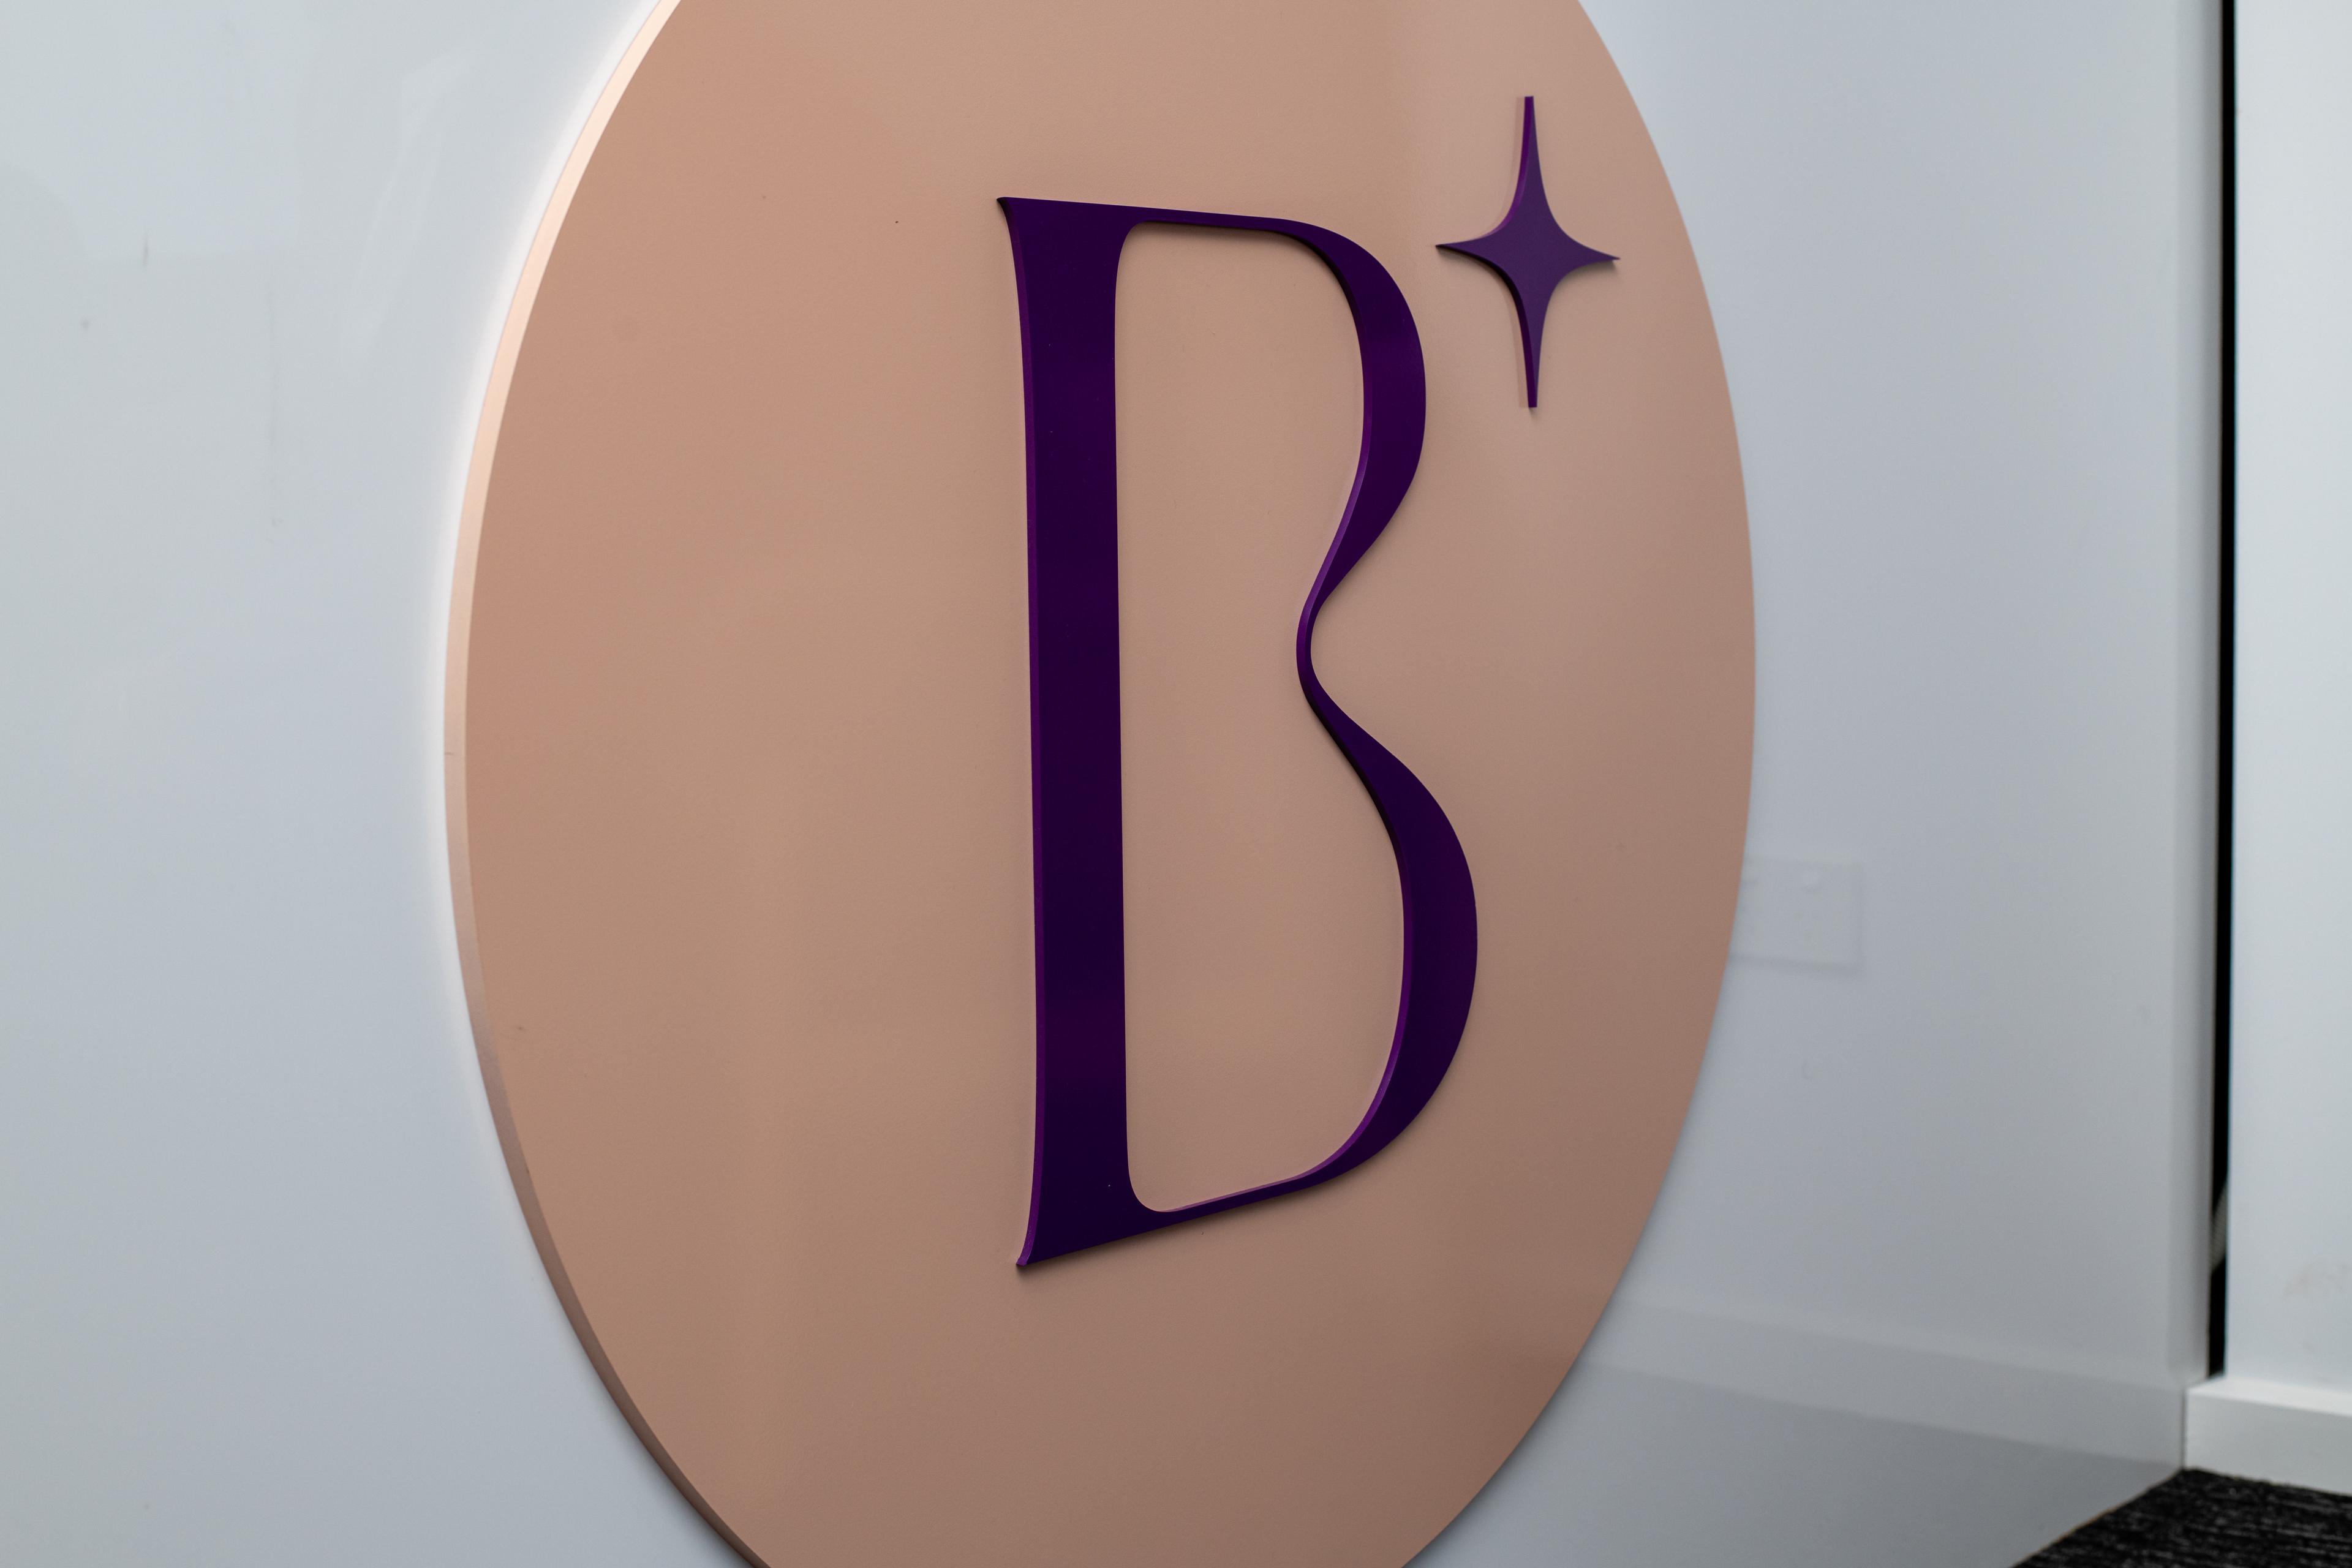 Bewitching logo signage at reception